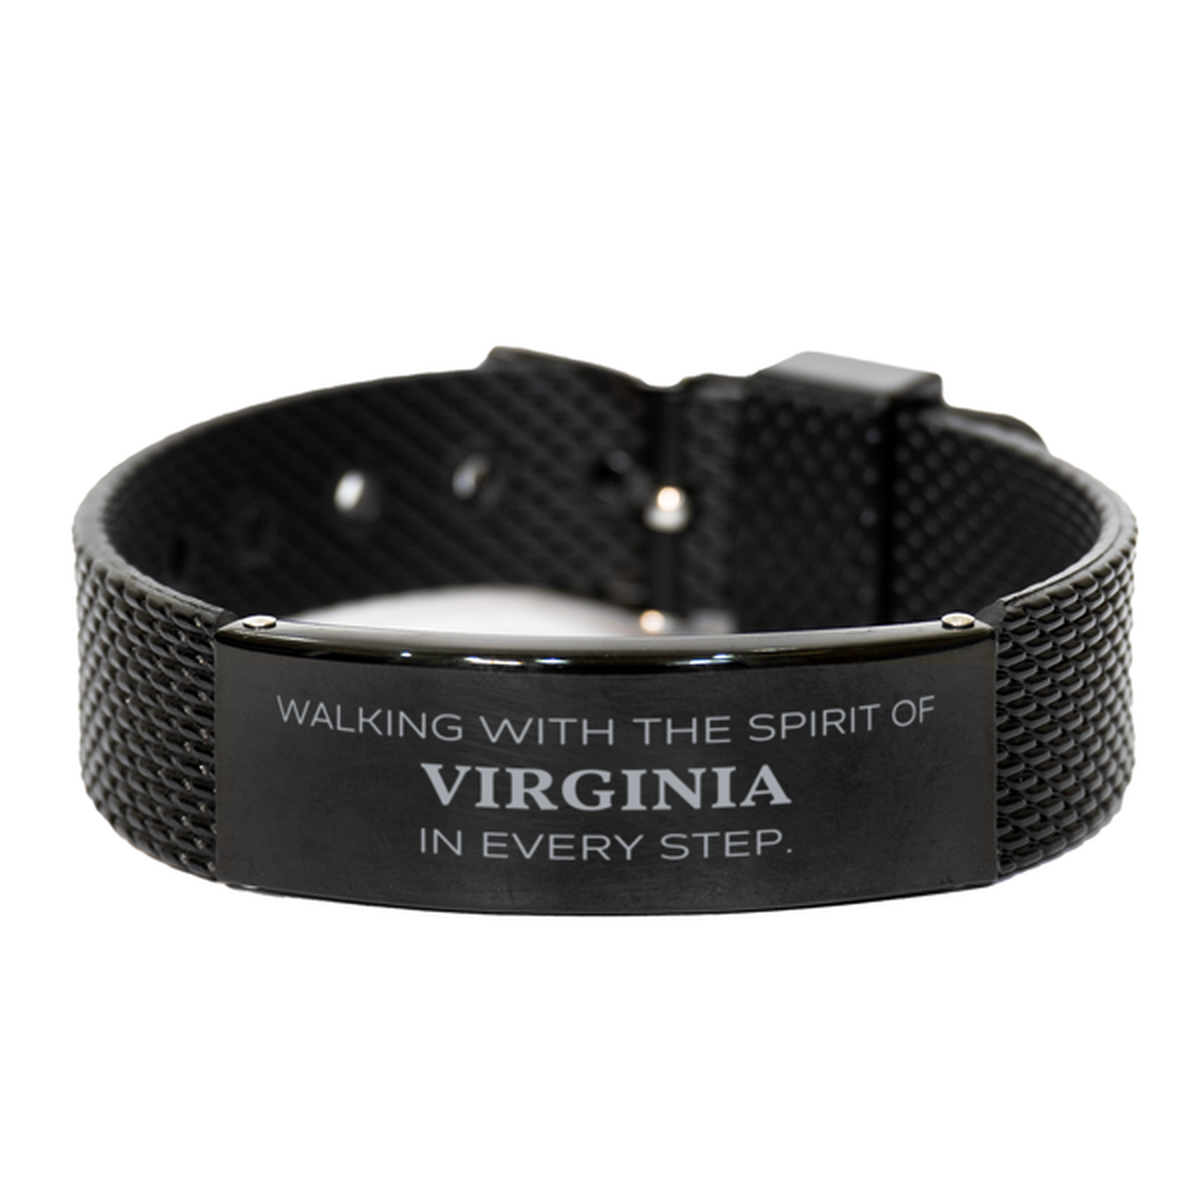 Virginia Gifts, Walking with the spirit, Love Virginia Birthday Christmas Black Shark Mesh Bracelet For Virginia People, Men, Women, Friends